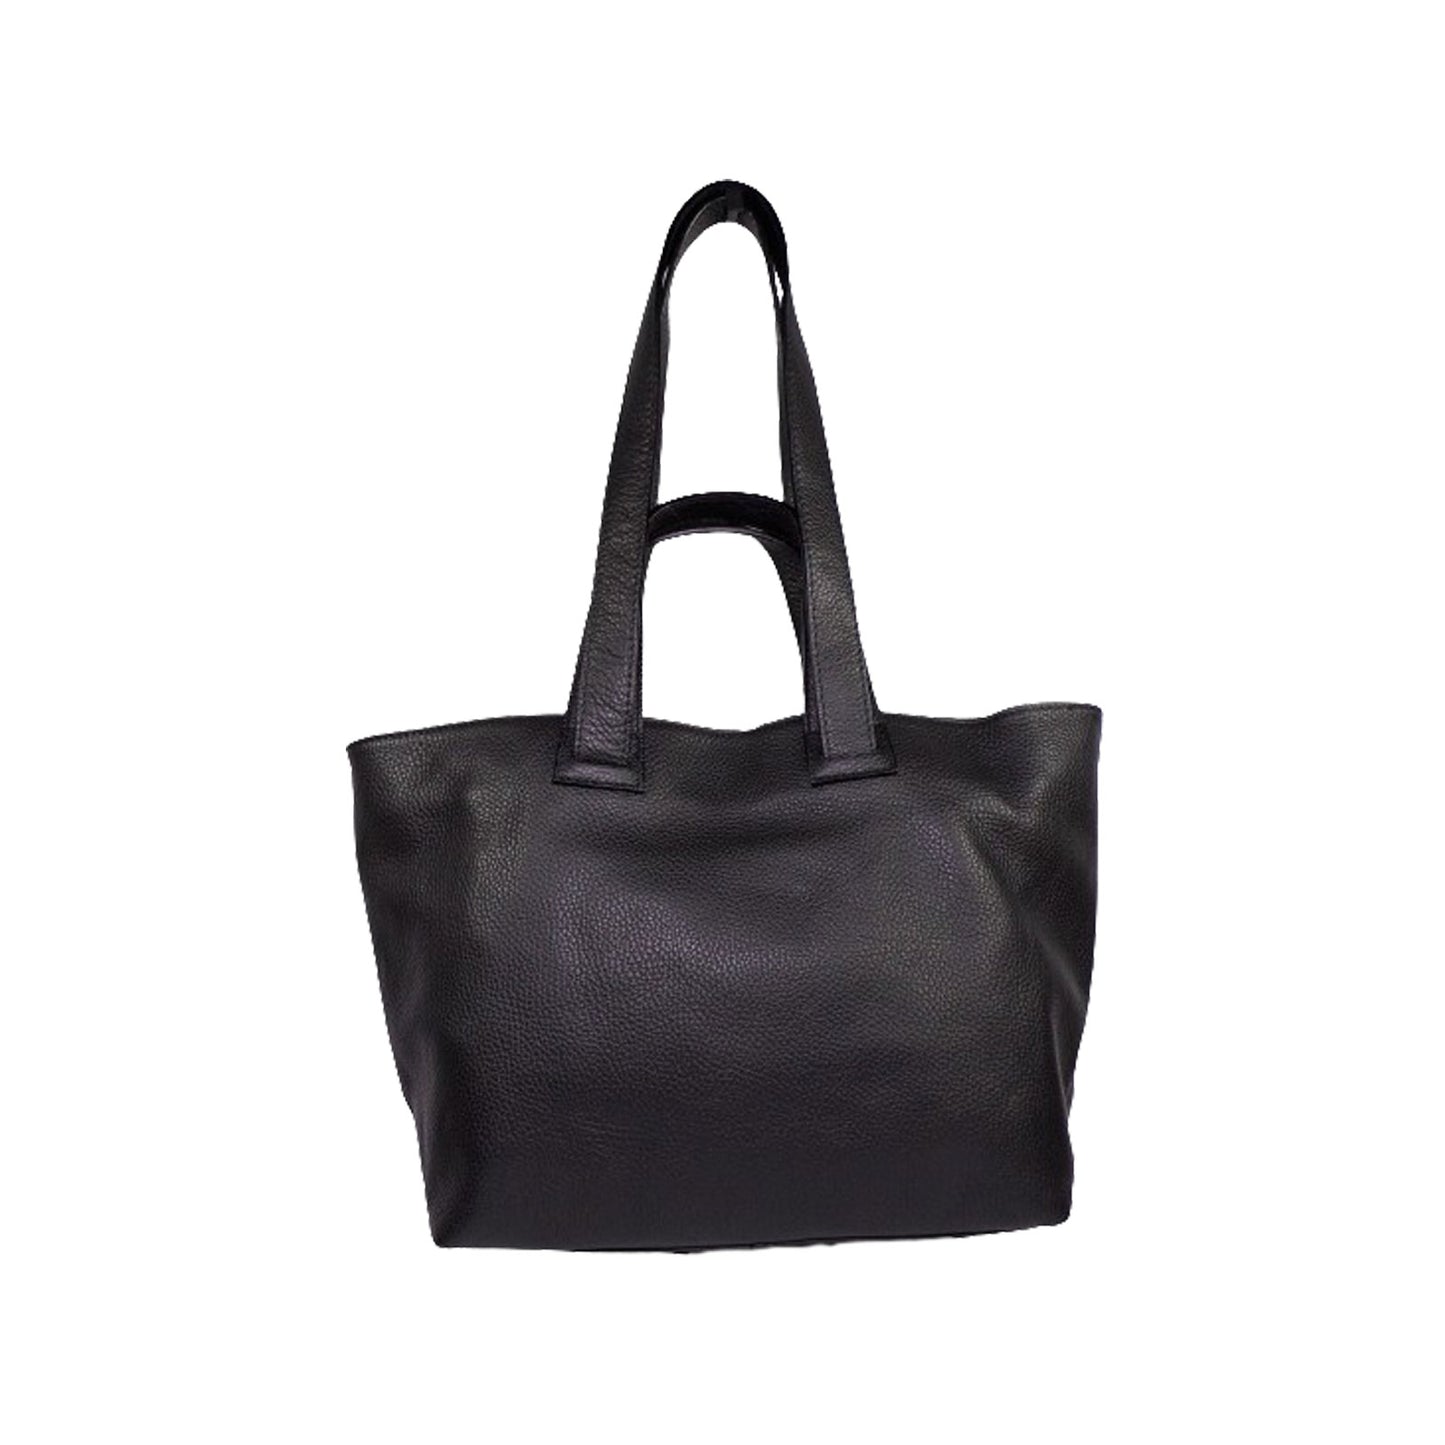 Brooklyn Bag in Black